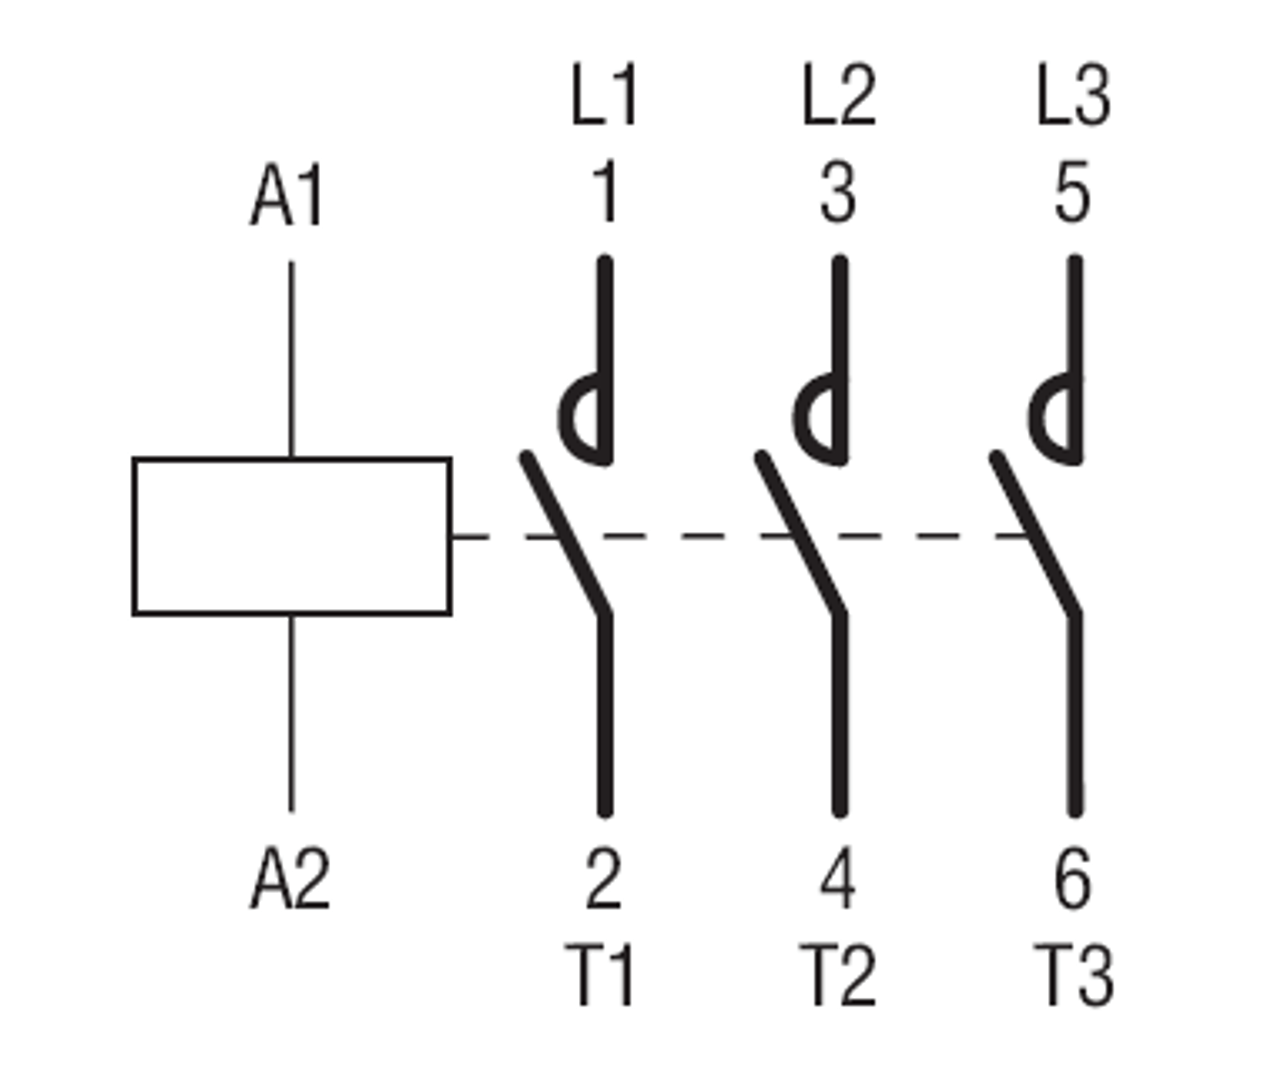 XTCE040D00D wiring diagram